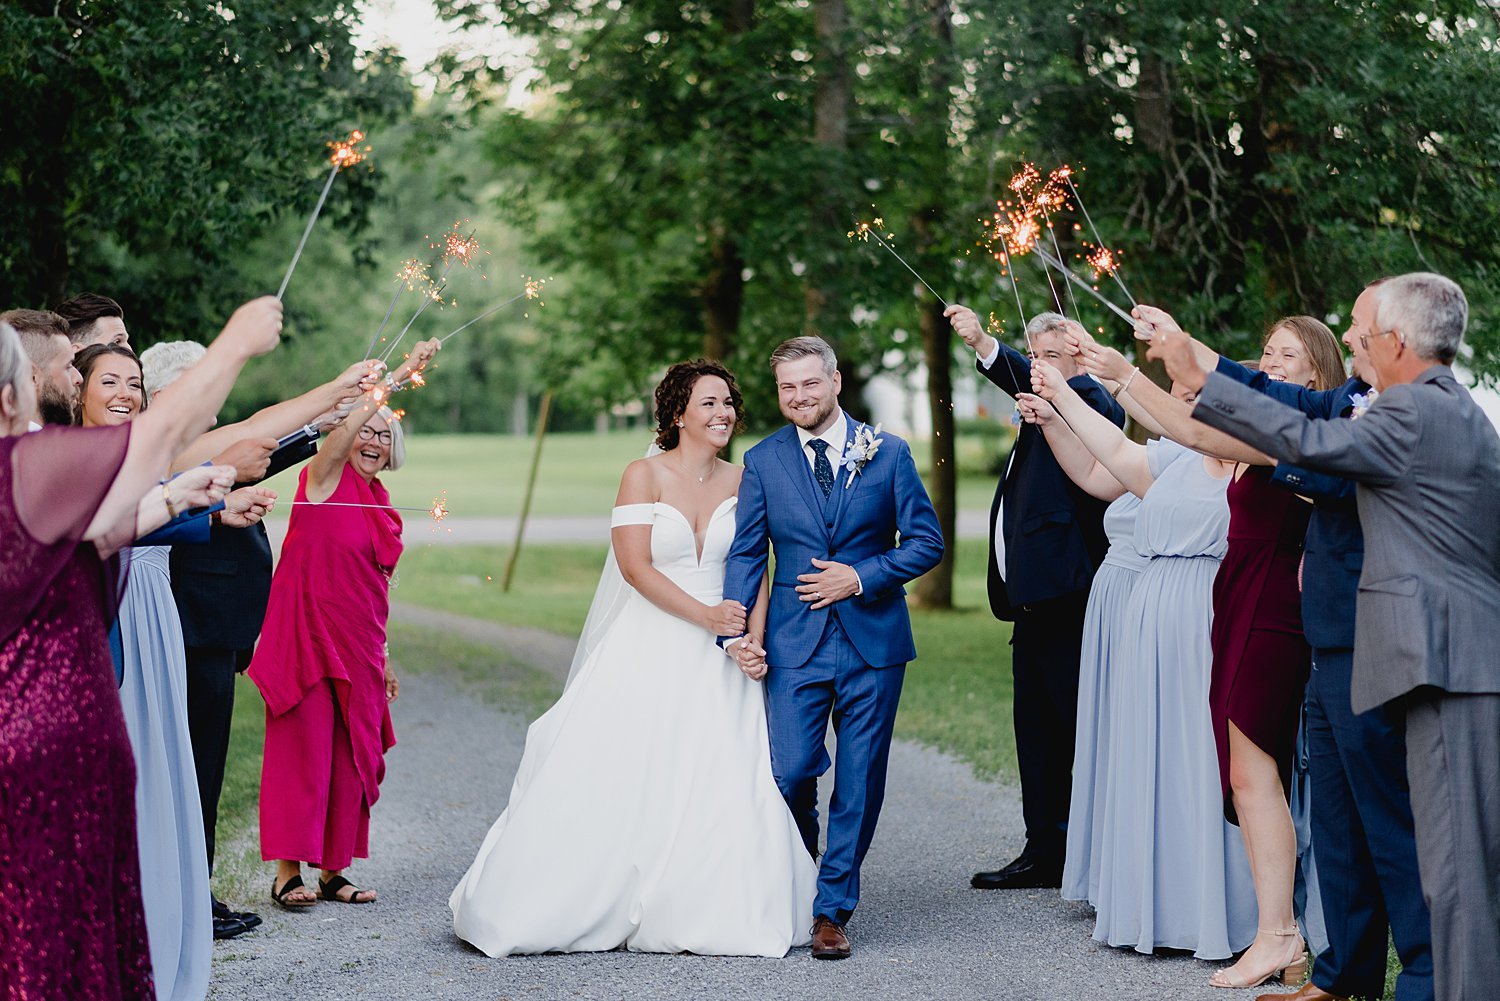 Elegant Summer Backyard Tented Wedding in Sydenham, Ontario | Prince Edward County Wedding Photographer | Holly McMurter Photographs_0089.jpg